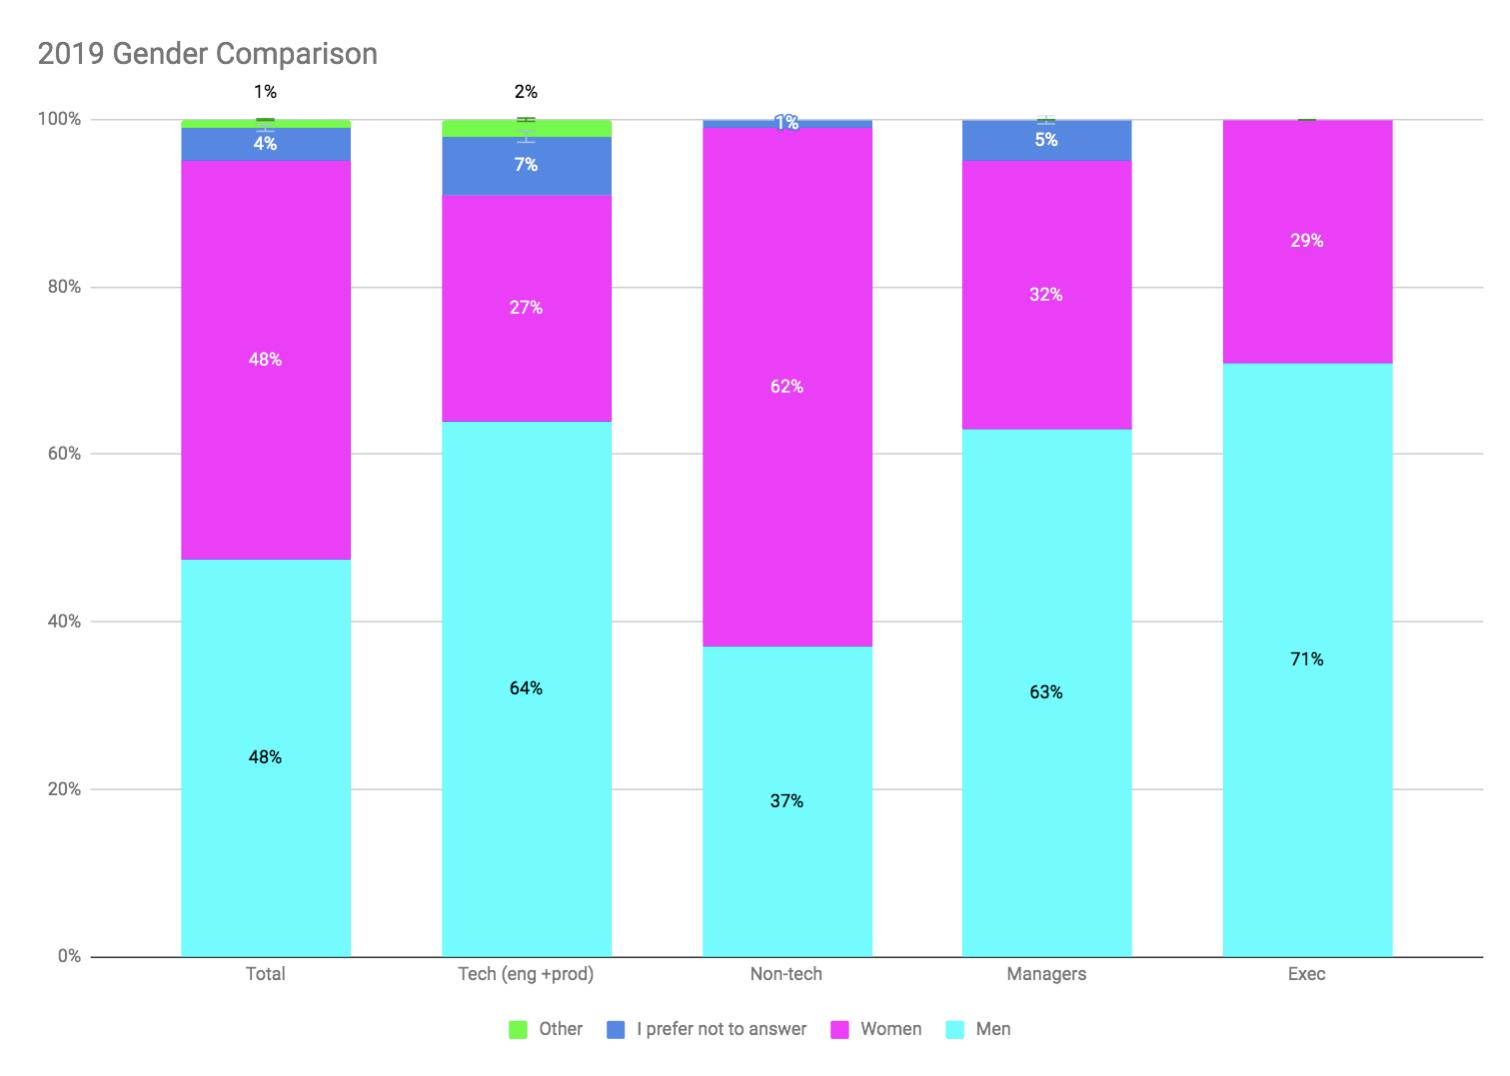 2019 gender comparison bar graph: 48% men, 48% women, 4% prefer not to answer, 1% other